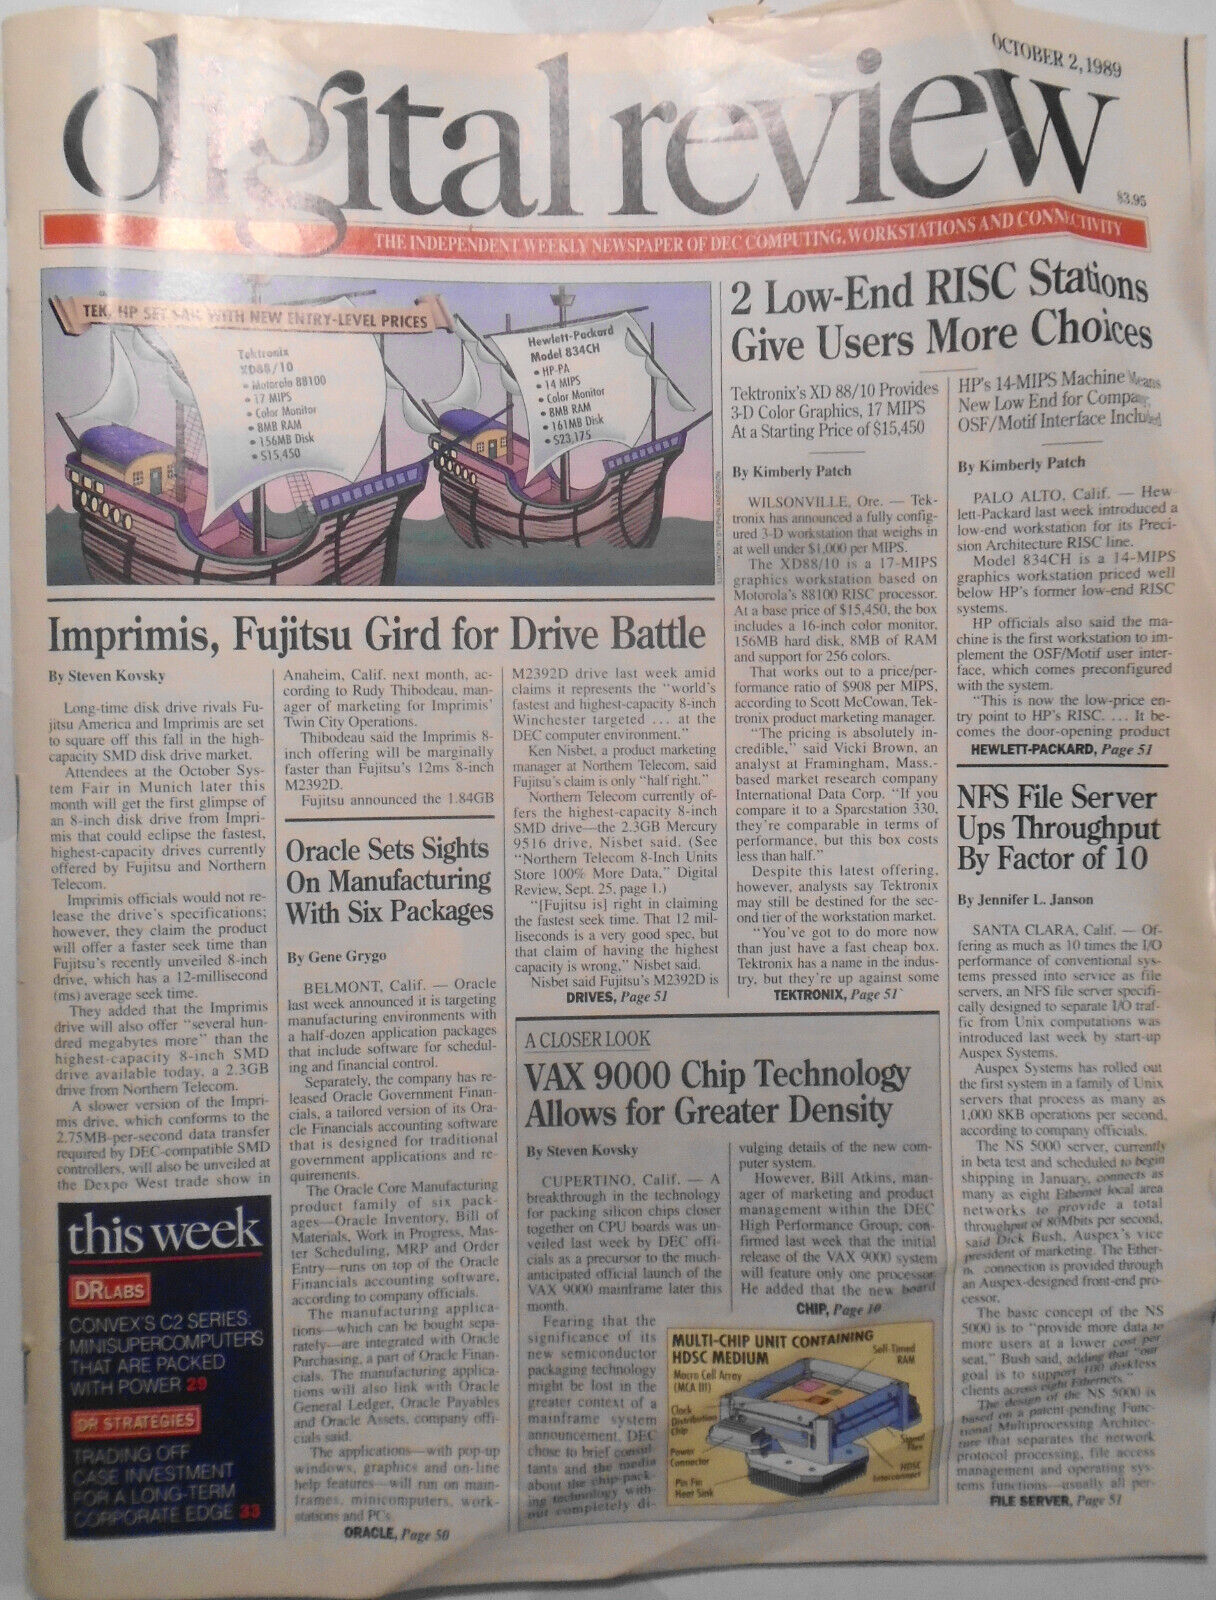 Digital Review, Oct 2, 1989 : independent weekly newspaper of DEC computing